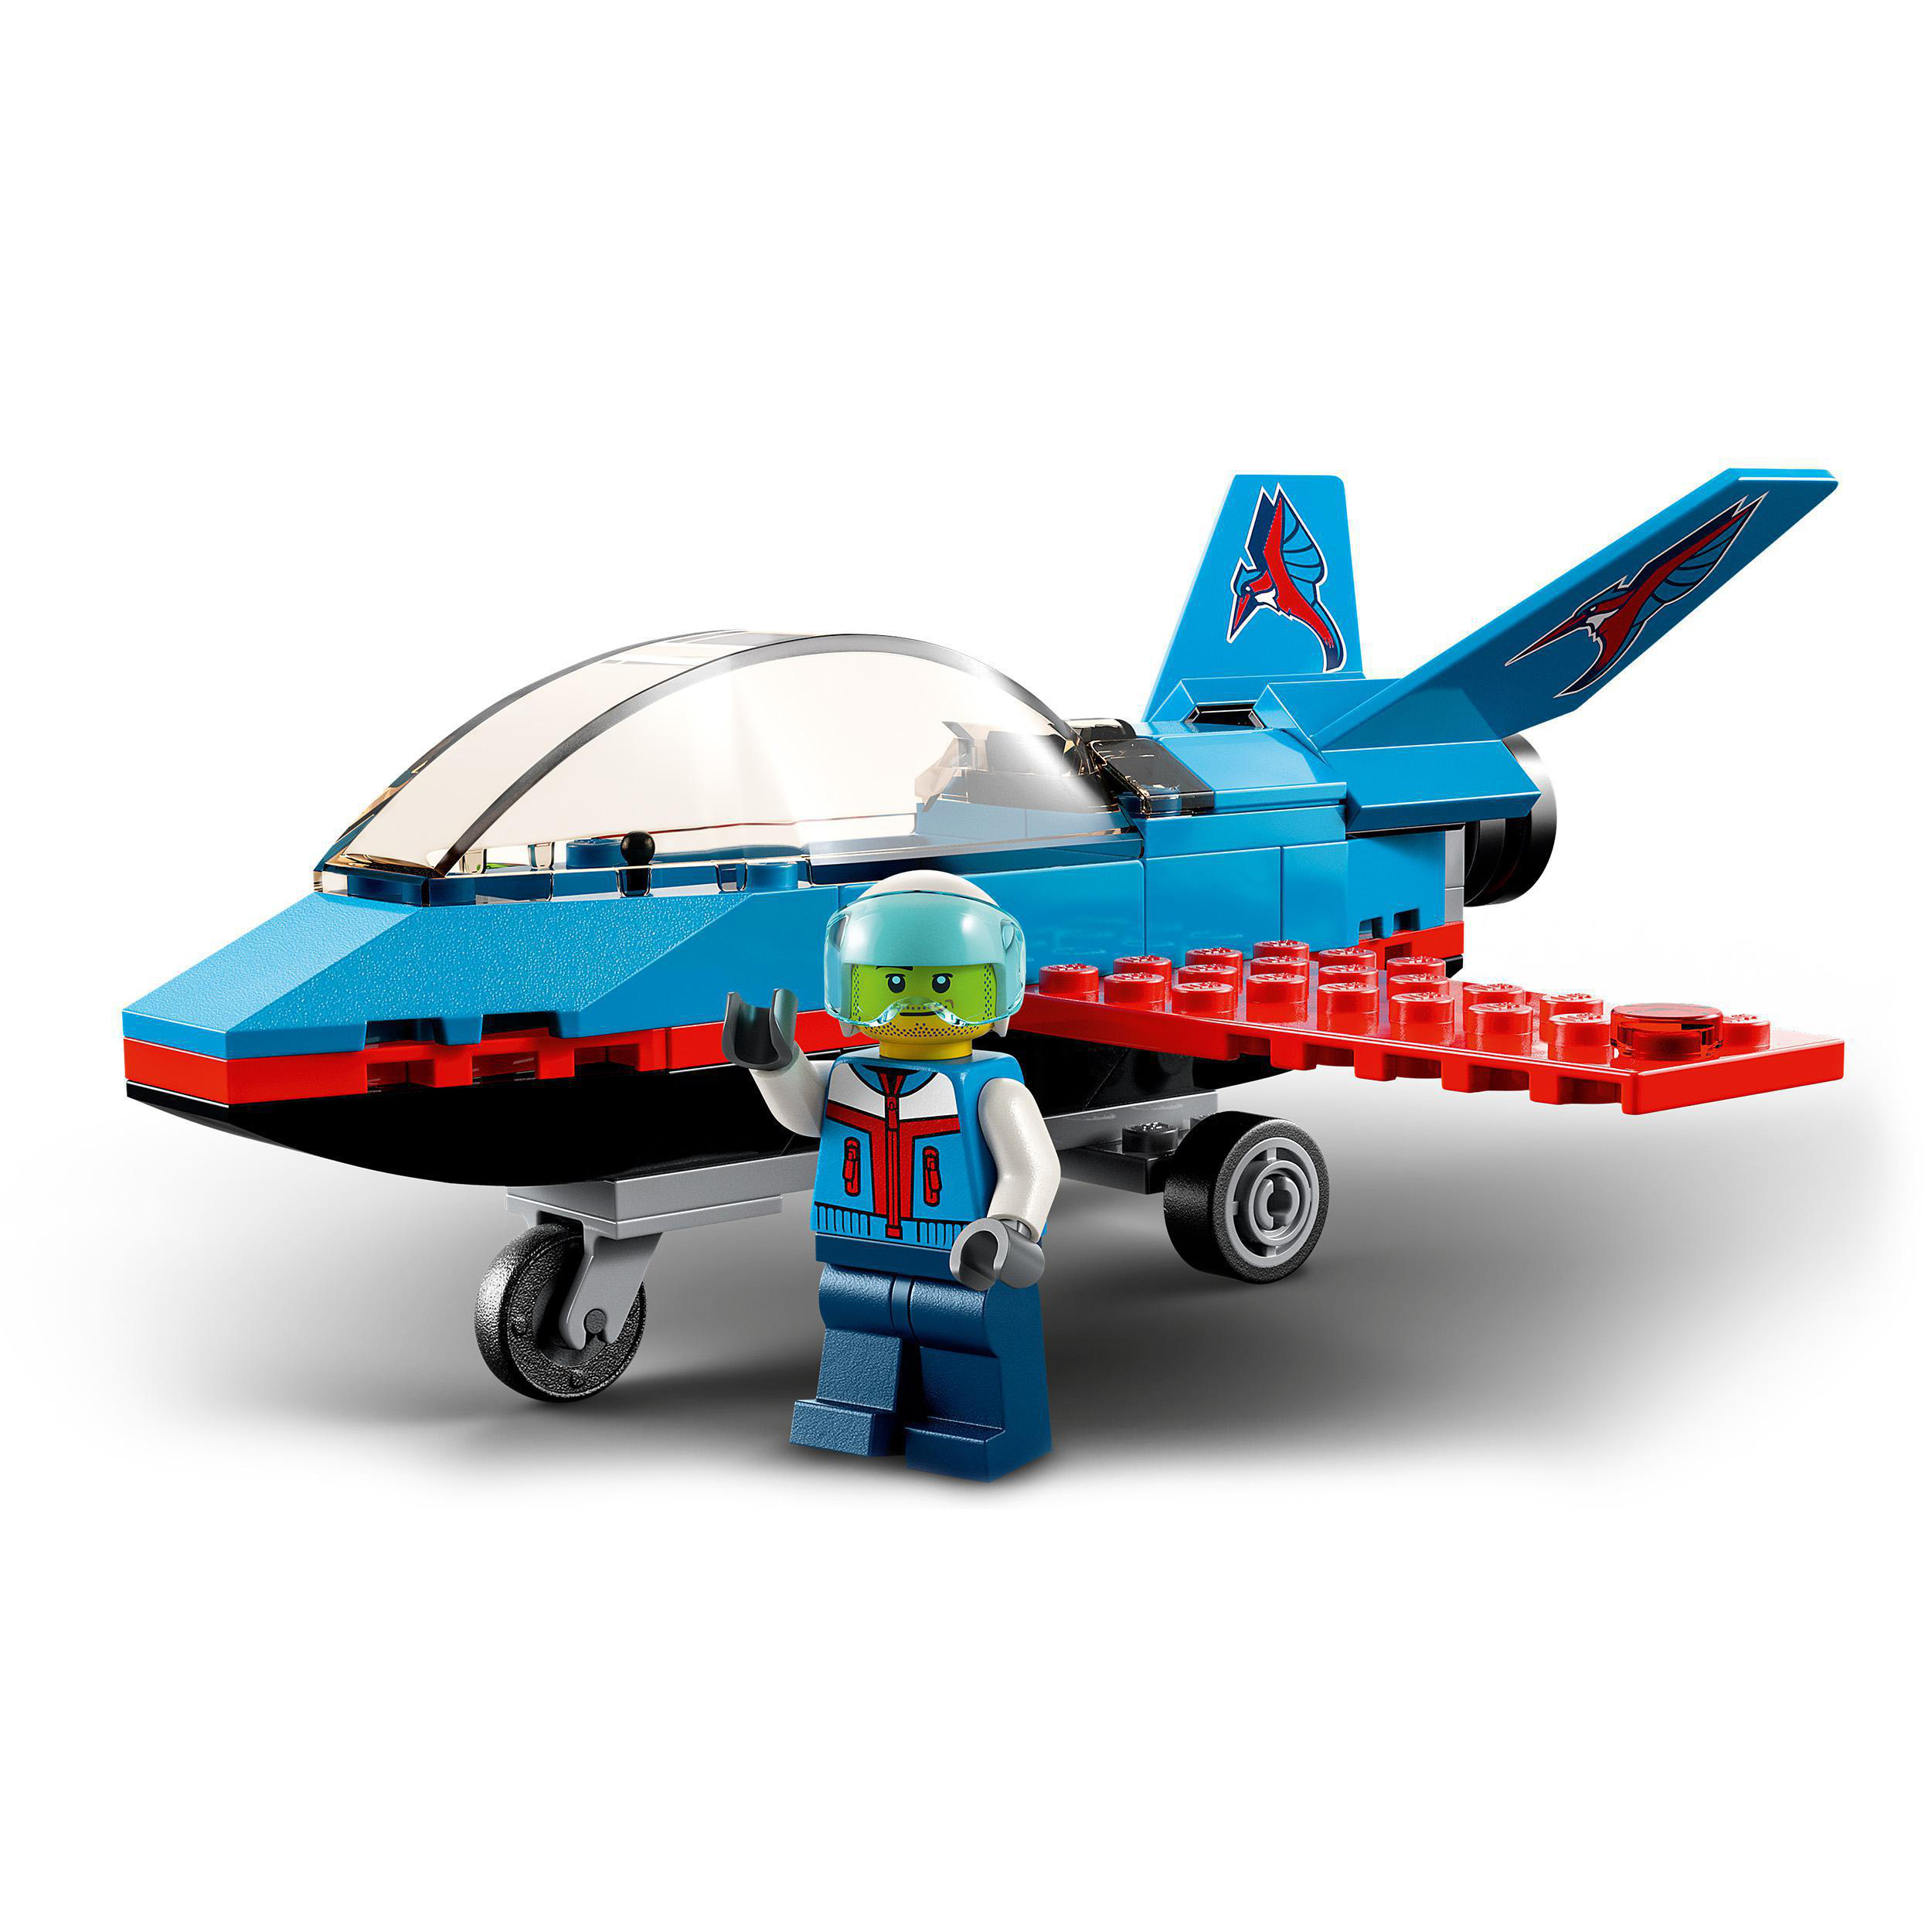 LEGO City 60323 Stuntflugzeug Mehrfarbig Bausatz